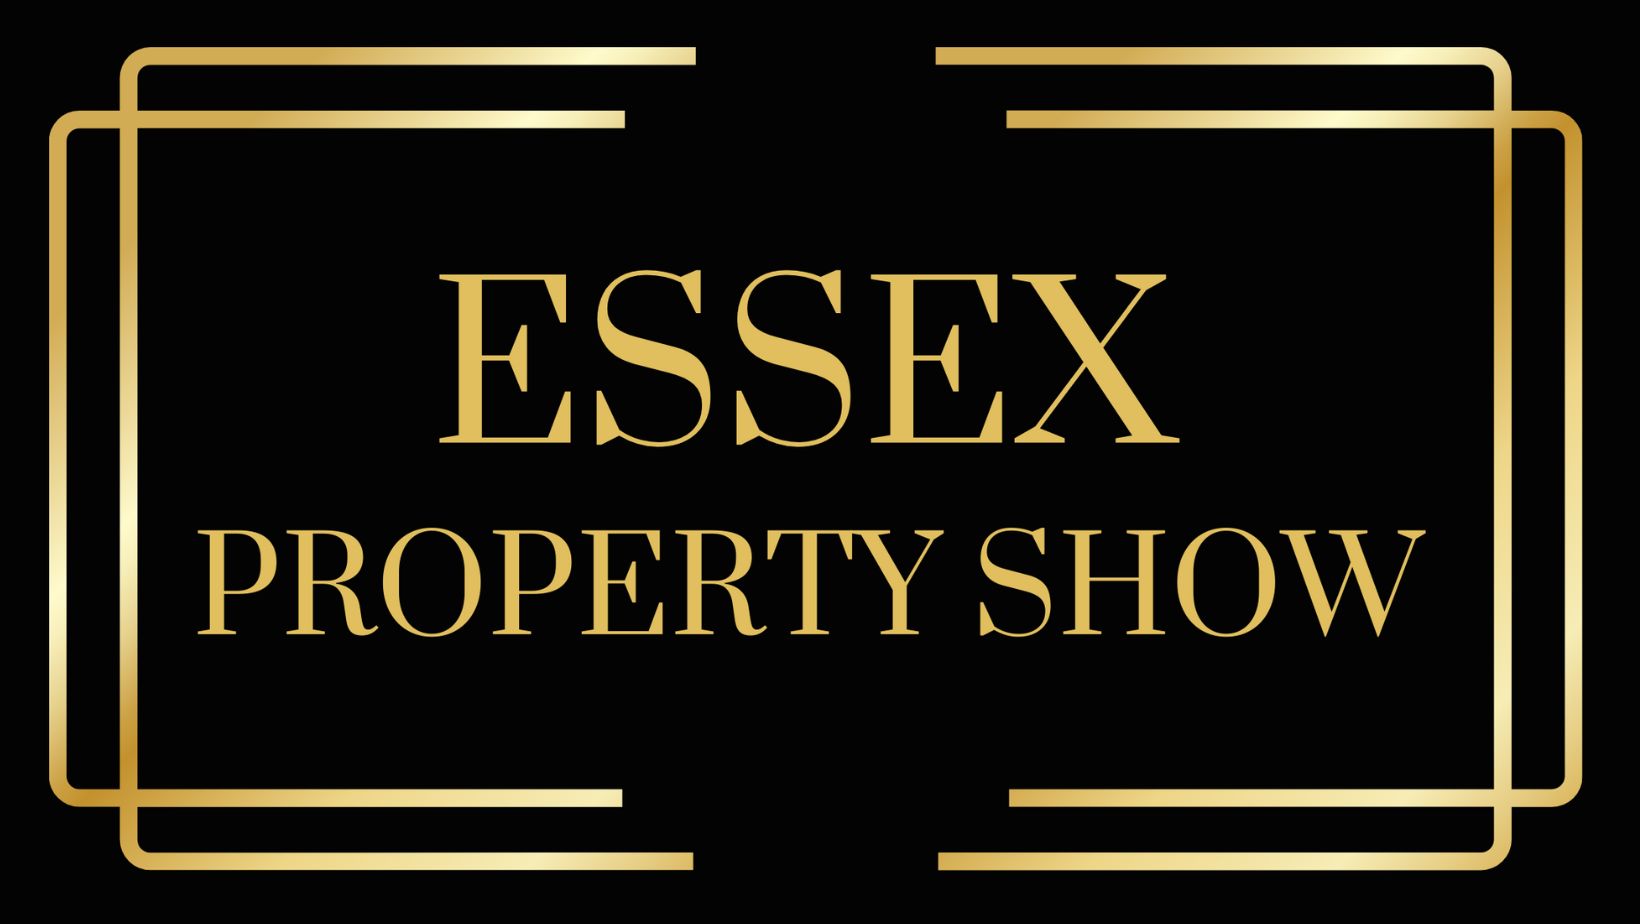 Essex Property Show, Colchester, England, United Kingdom